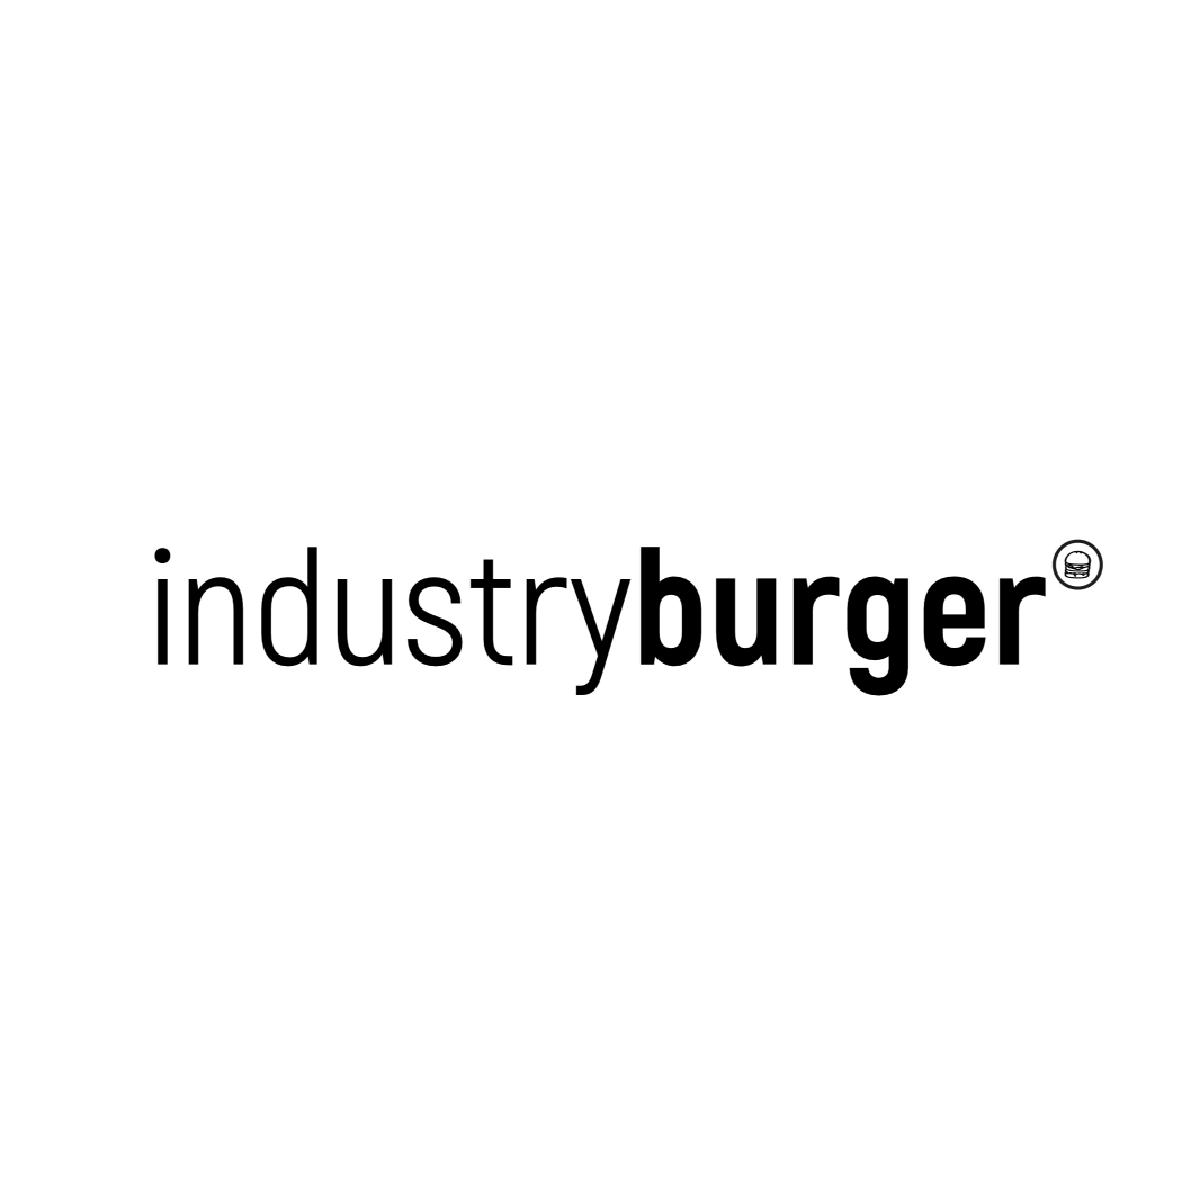 Industry Burger